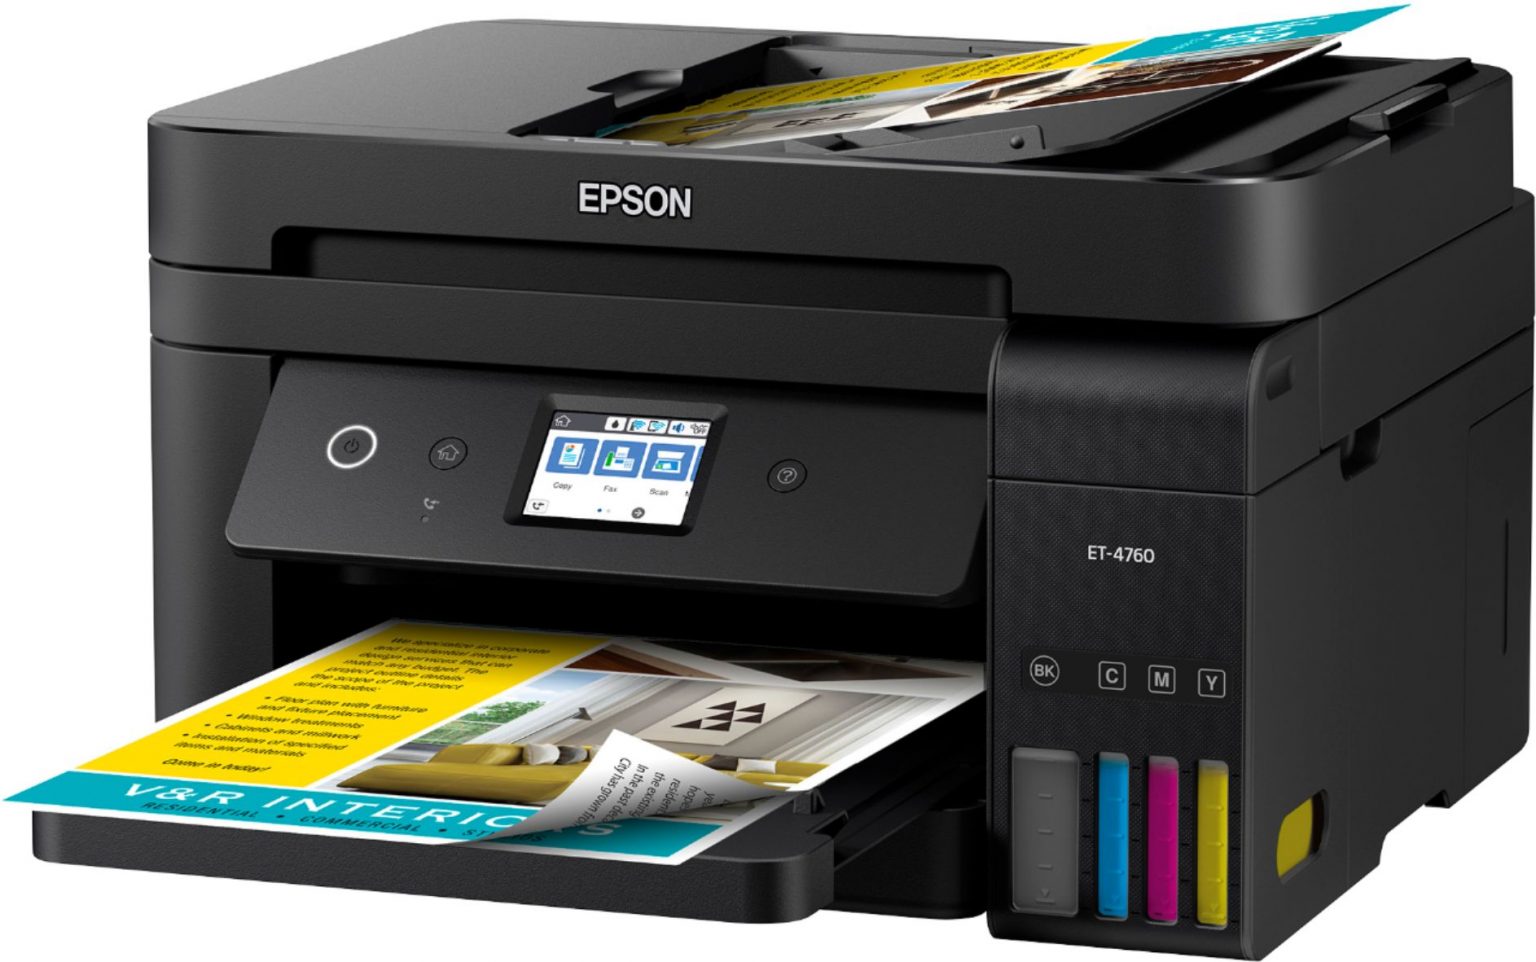 Epson Ecotank Et 4760 All In One Printer Dreams4less 8850